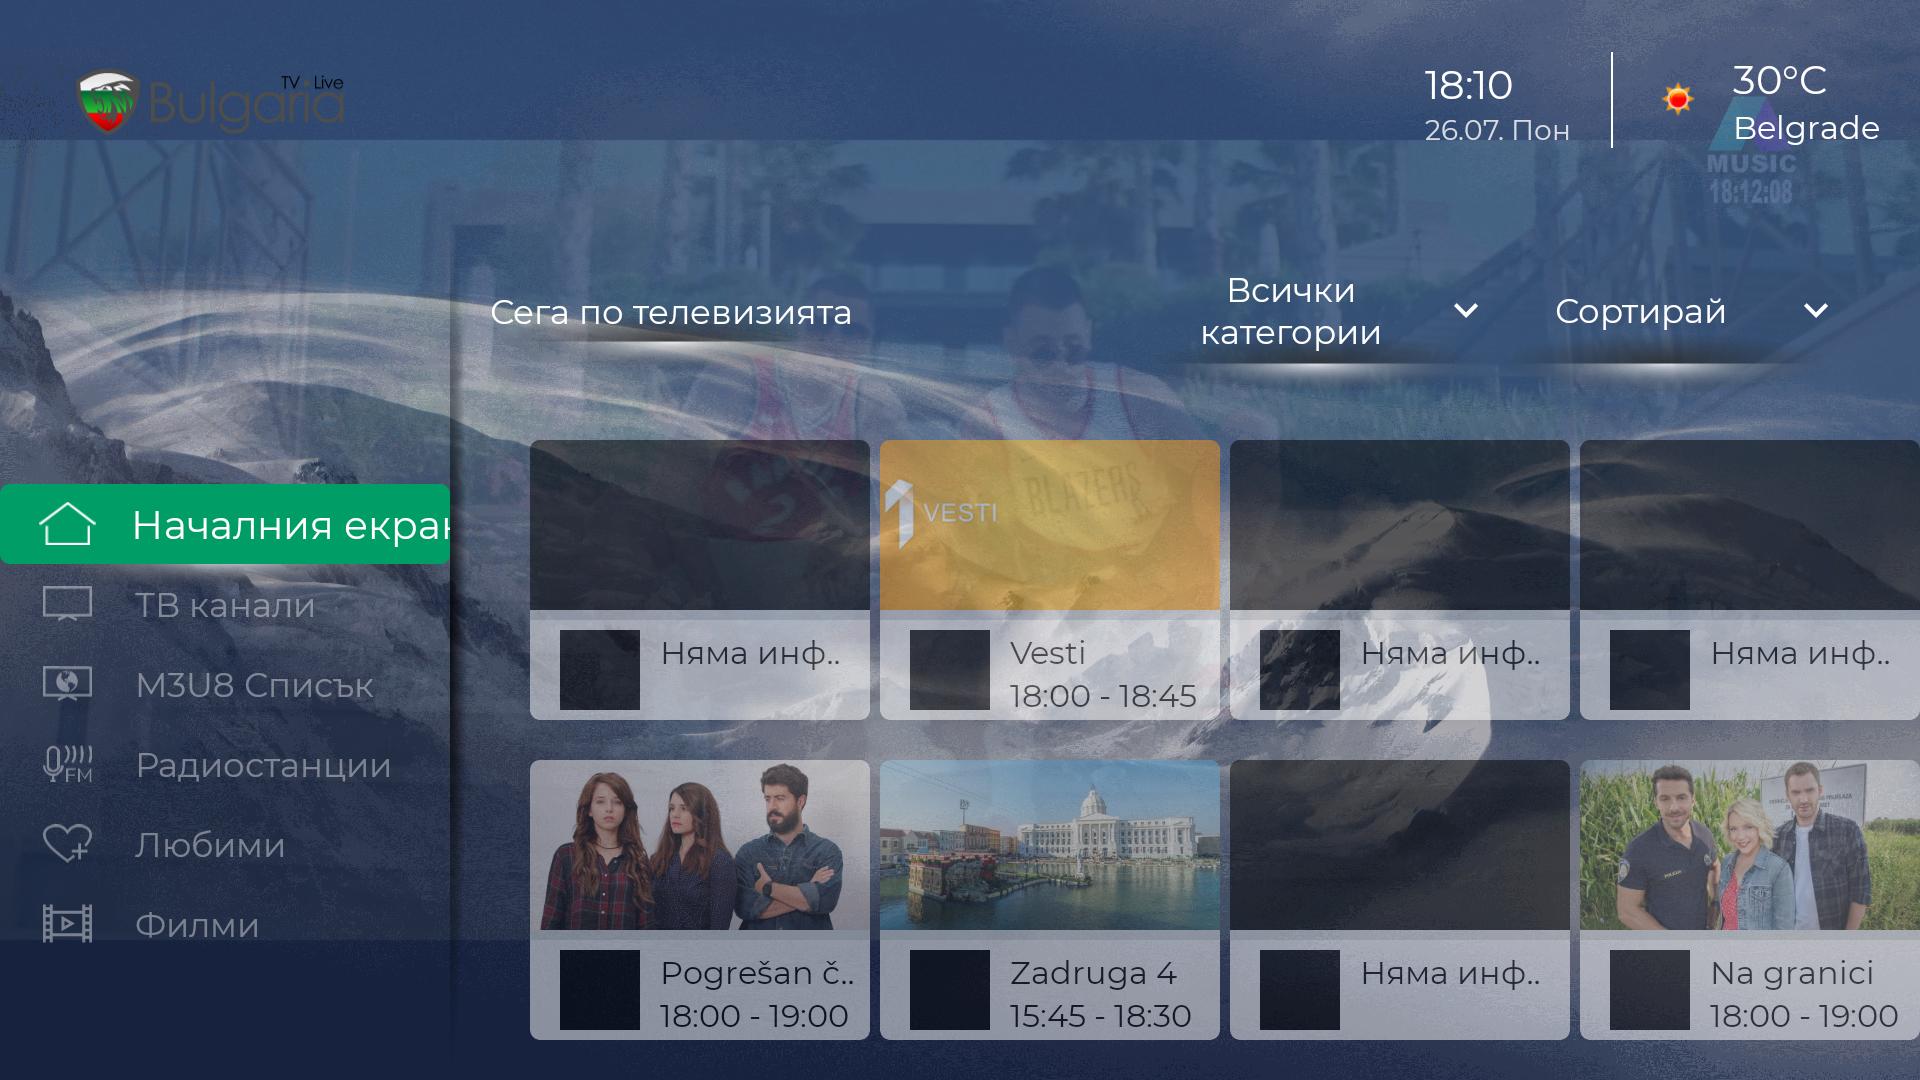 Bulgaria Live 1.2.04 Screenshot 9